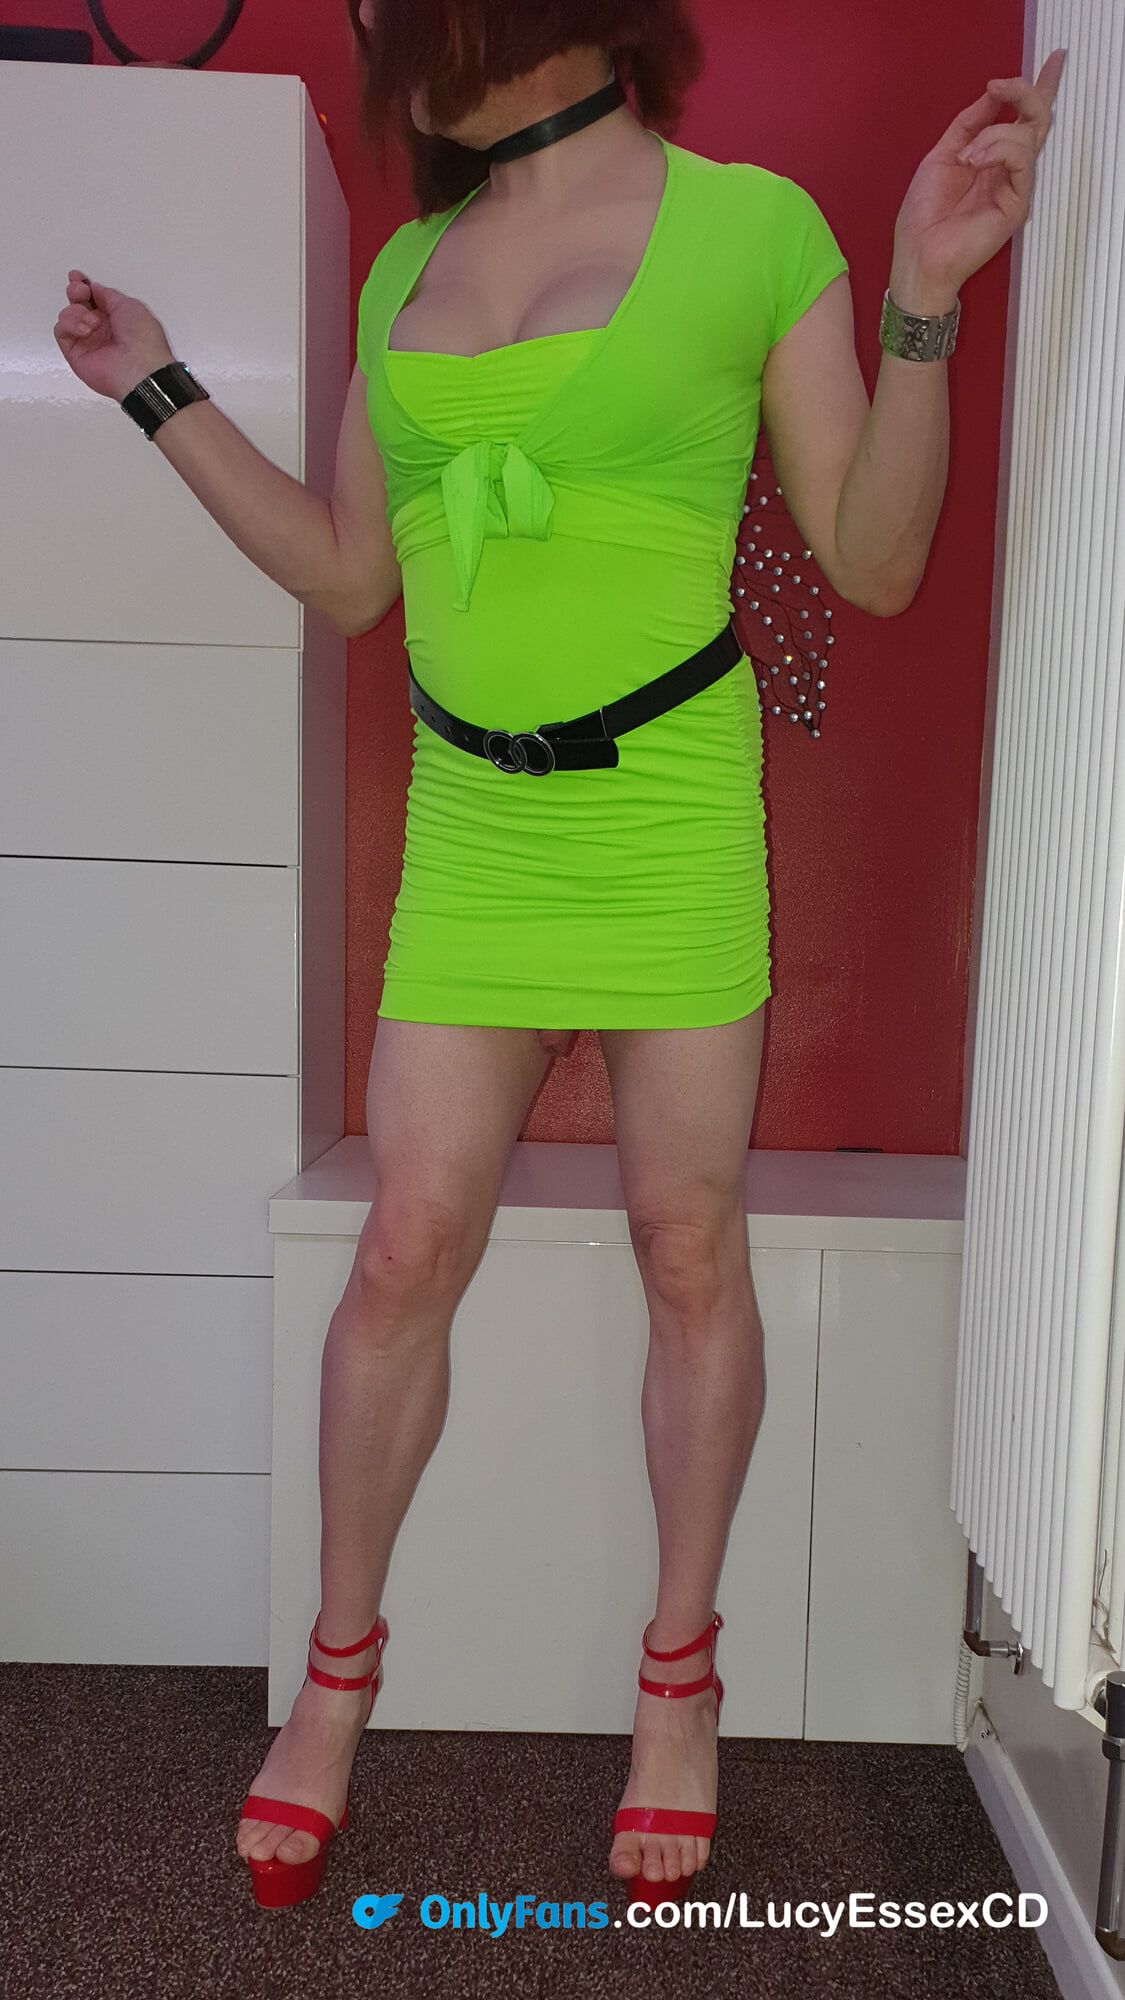 Big cock sissy Lucy bulging and wanking in green mini dress